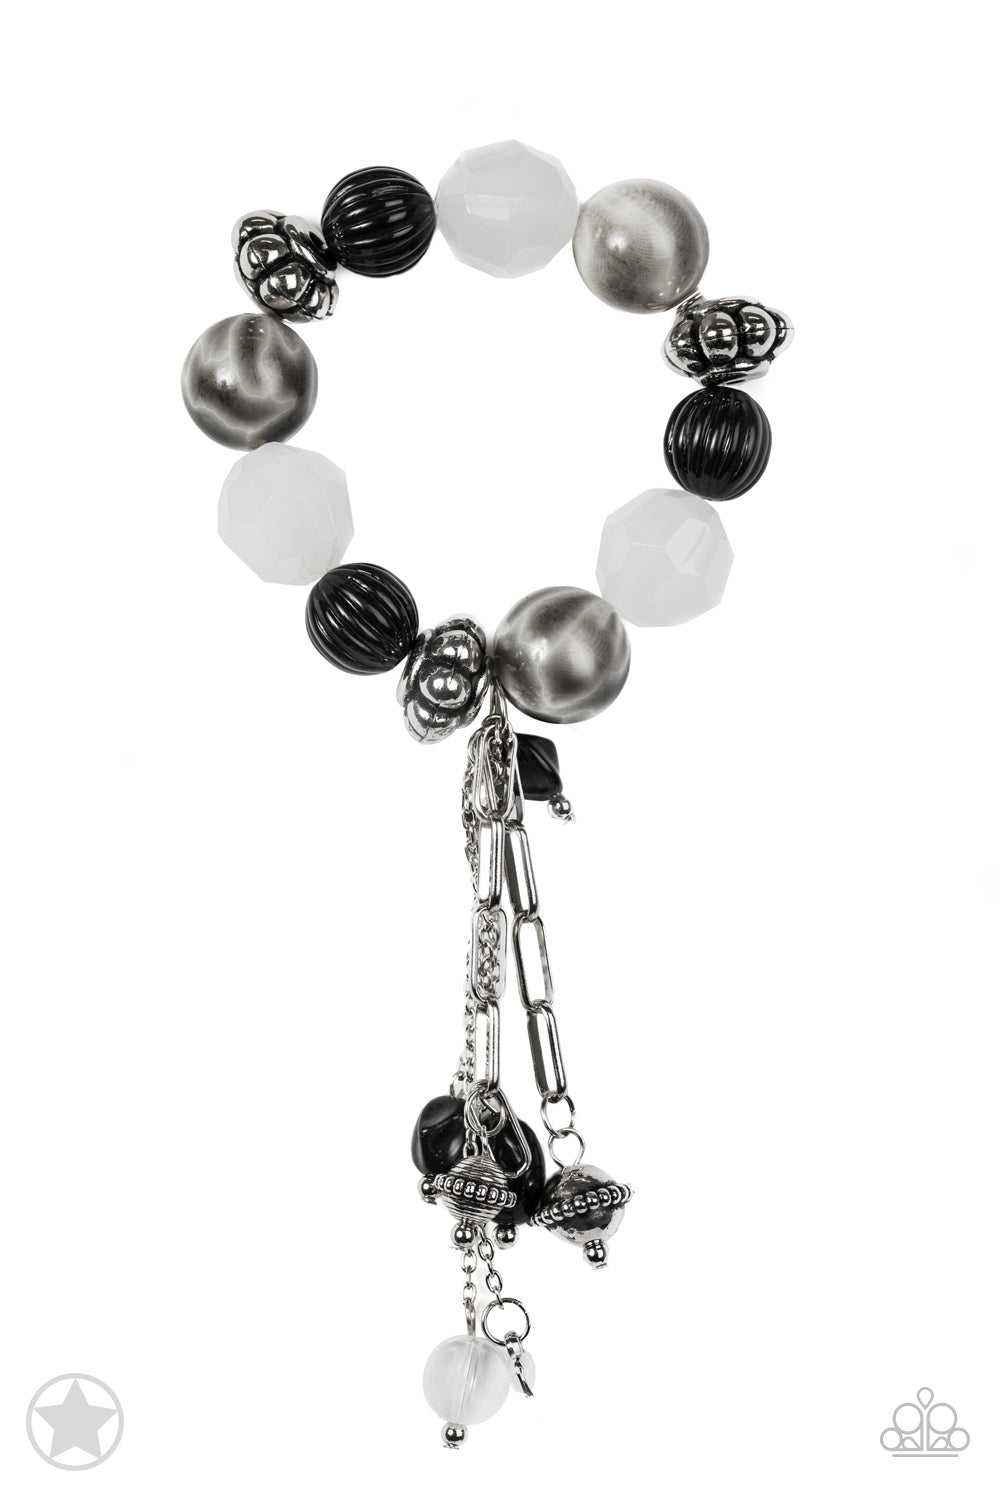 Seialoy New Tower & Camera Charm Bracelets For Women Diy Boy & Girl Panda  Beads Silver Color Bangle Jewelry Commemorative Gift - Bracelets -  AliExpress